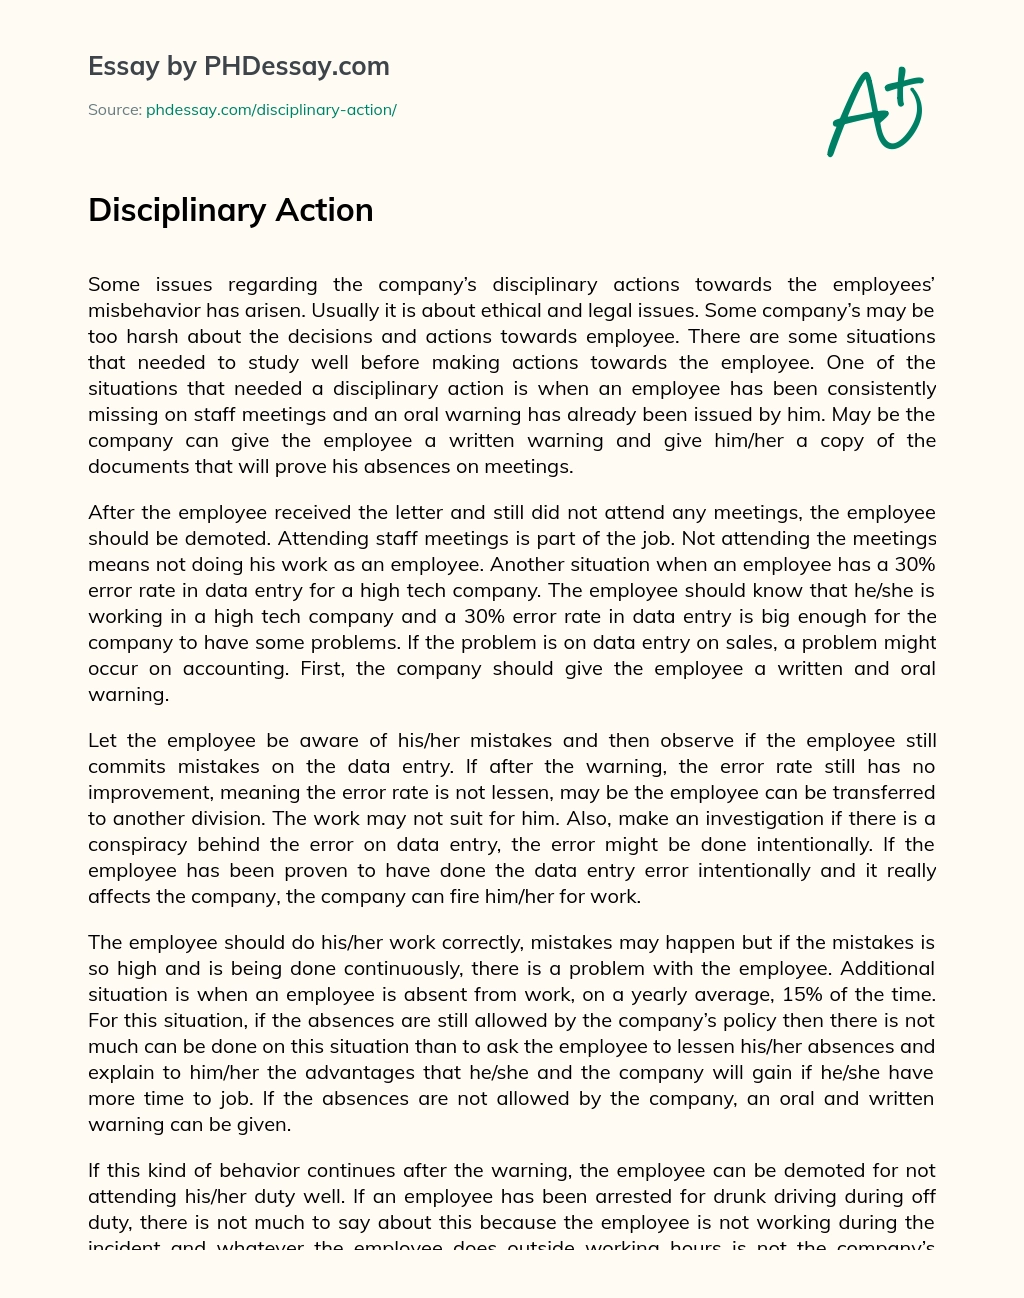 Disciplinary Action essay